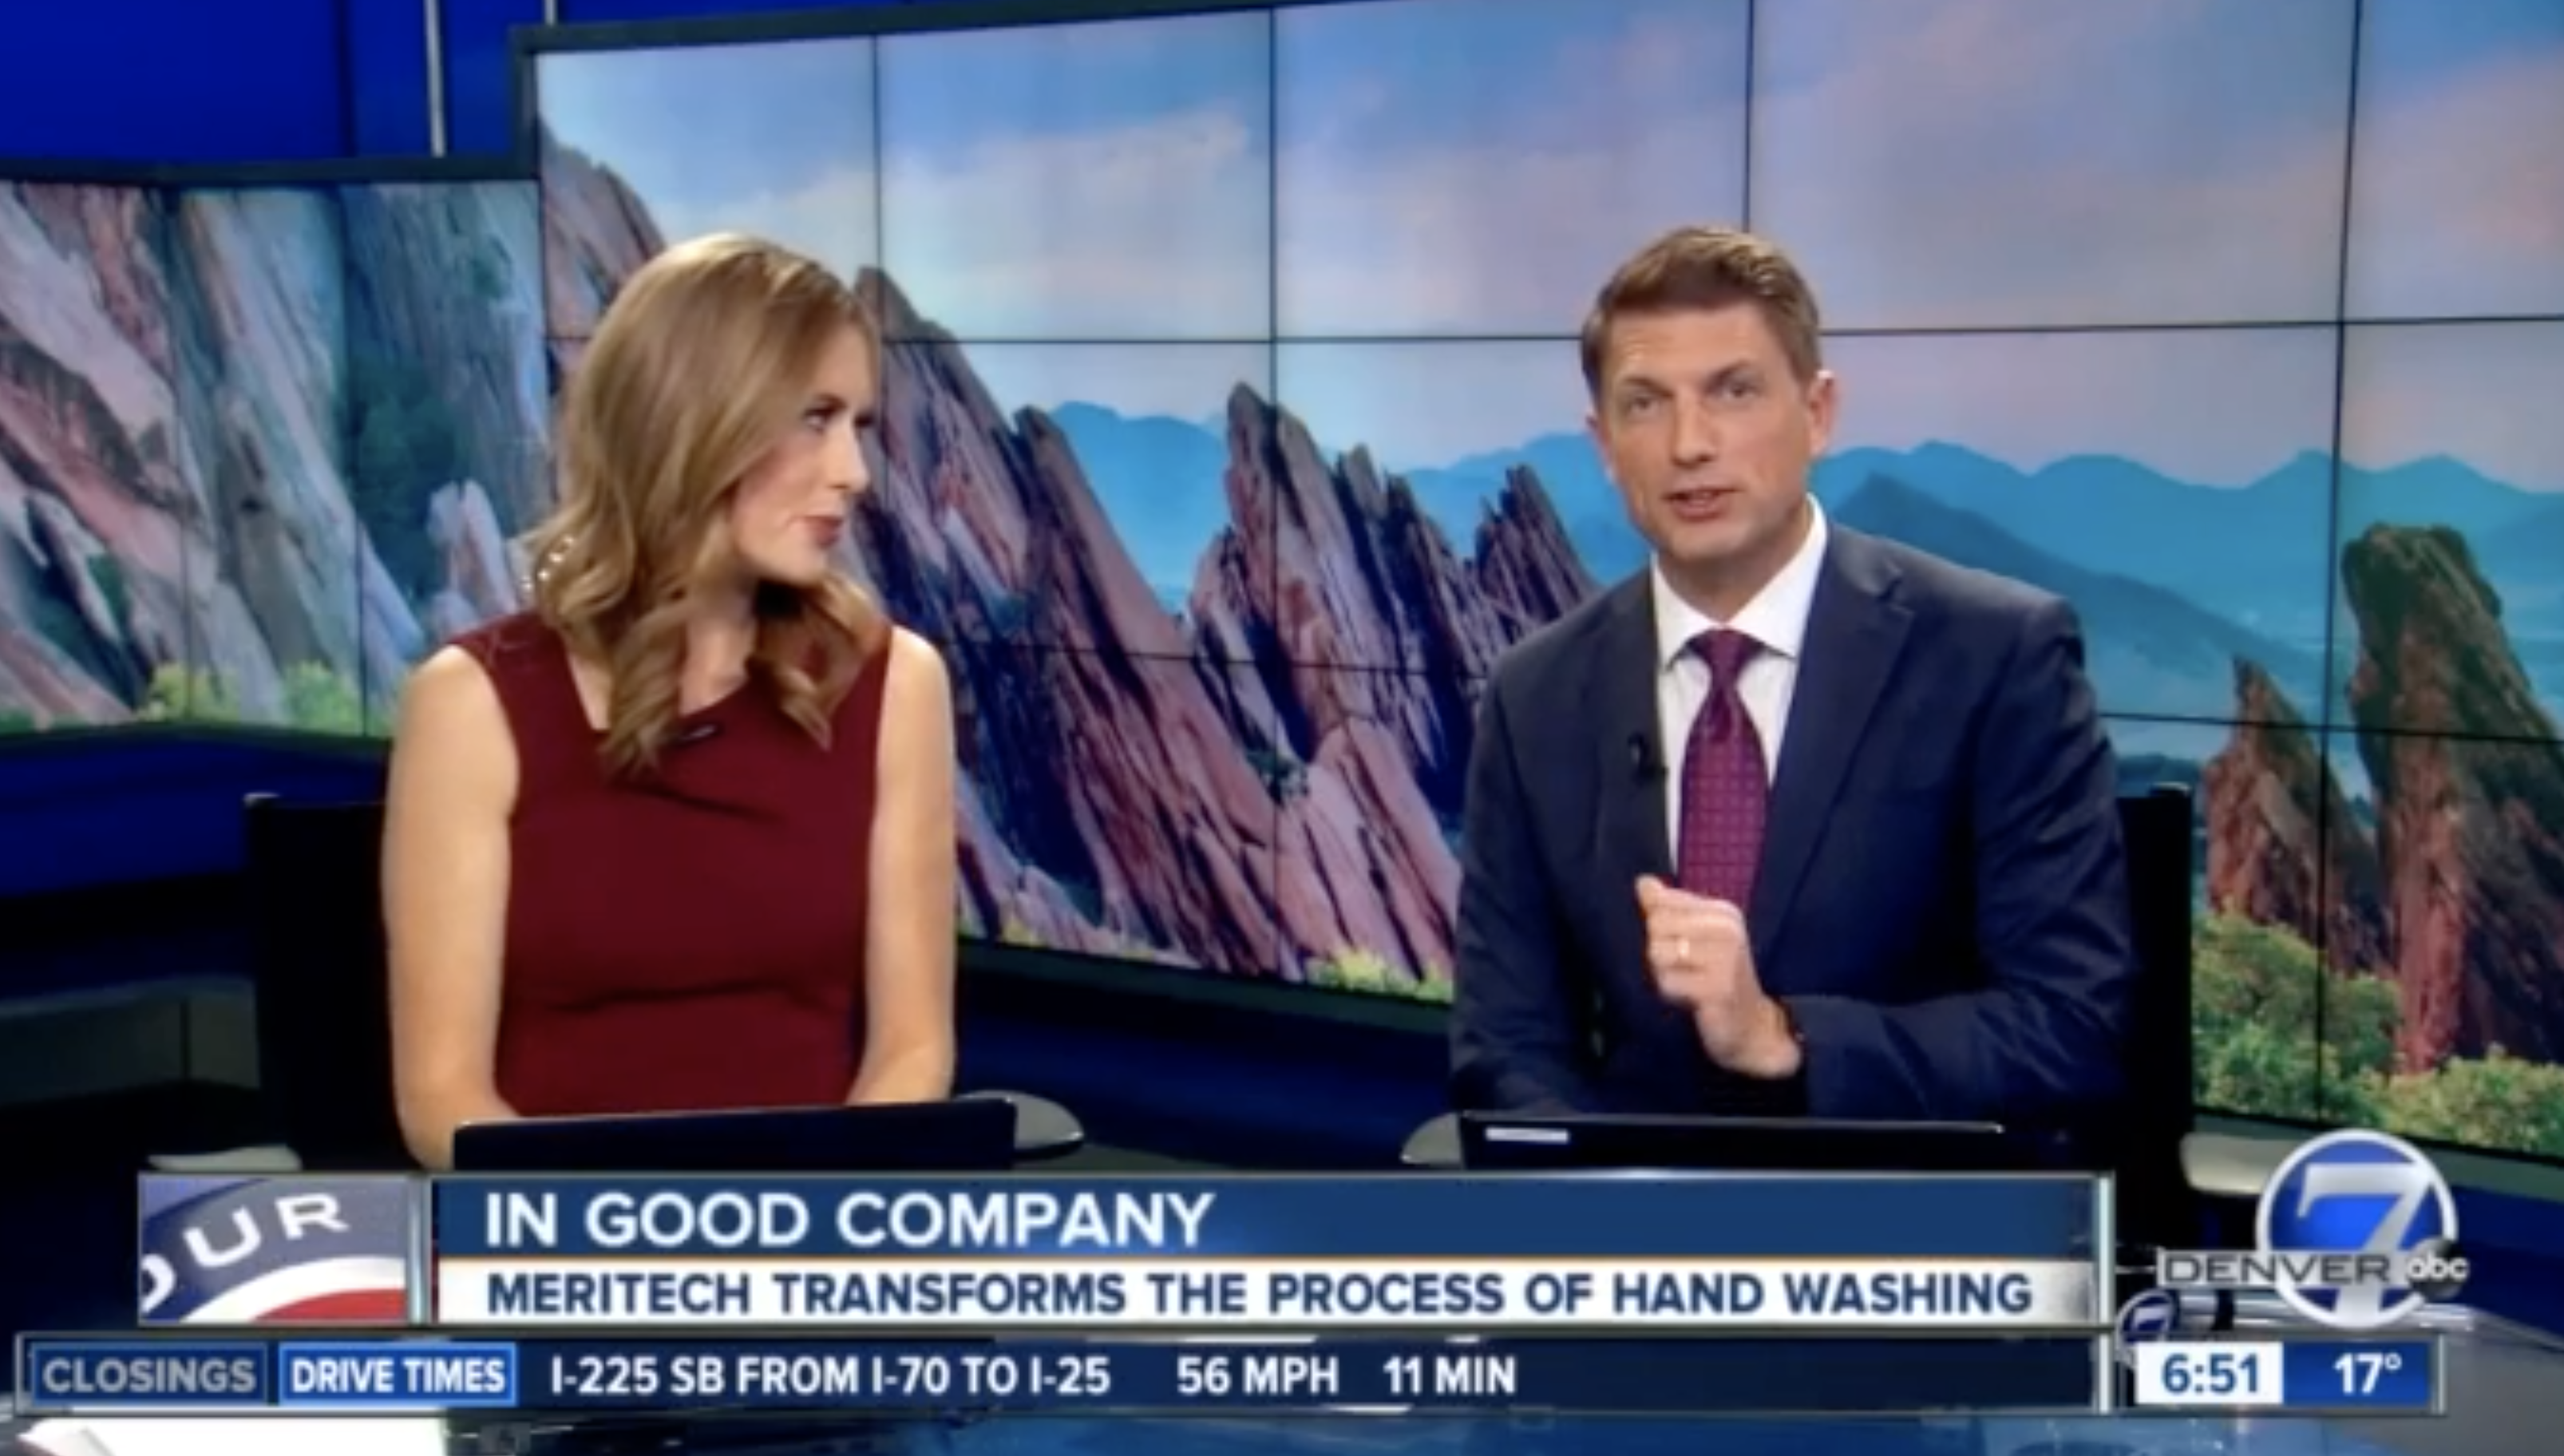 Denver 7 News Features Meritech Automated Handwashing Stations